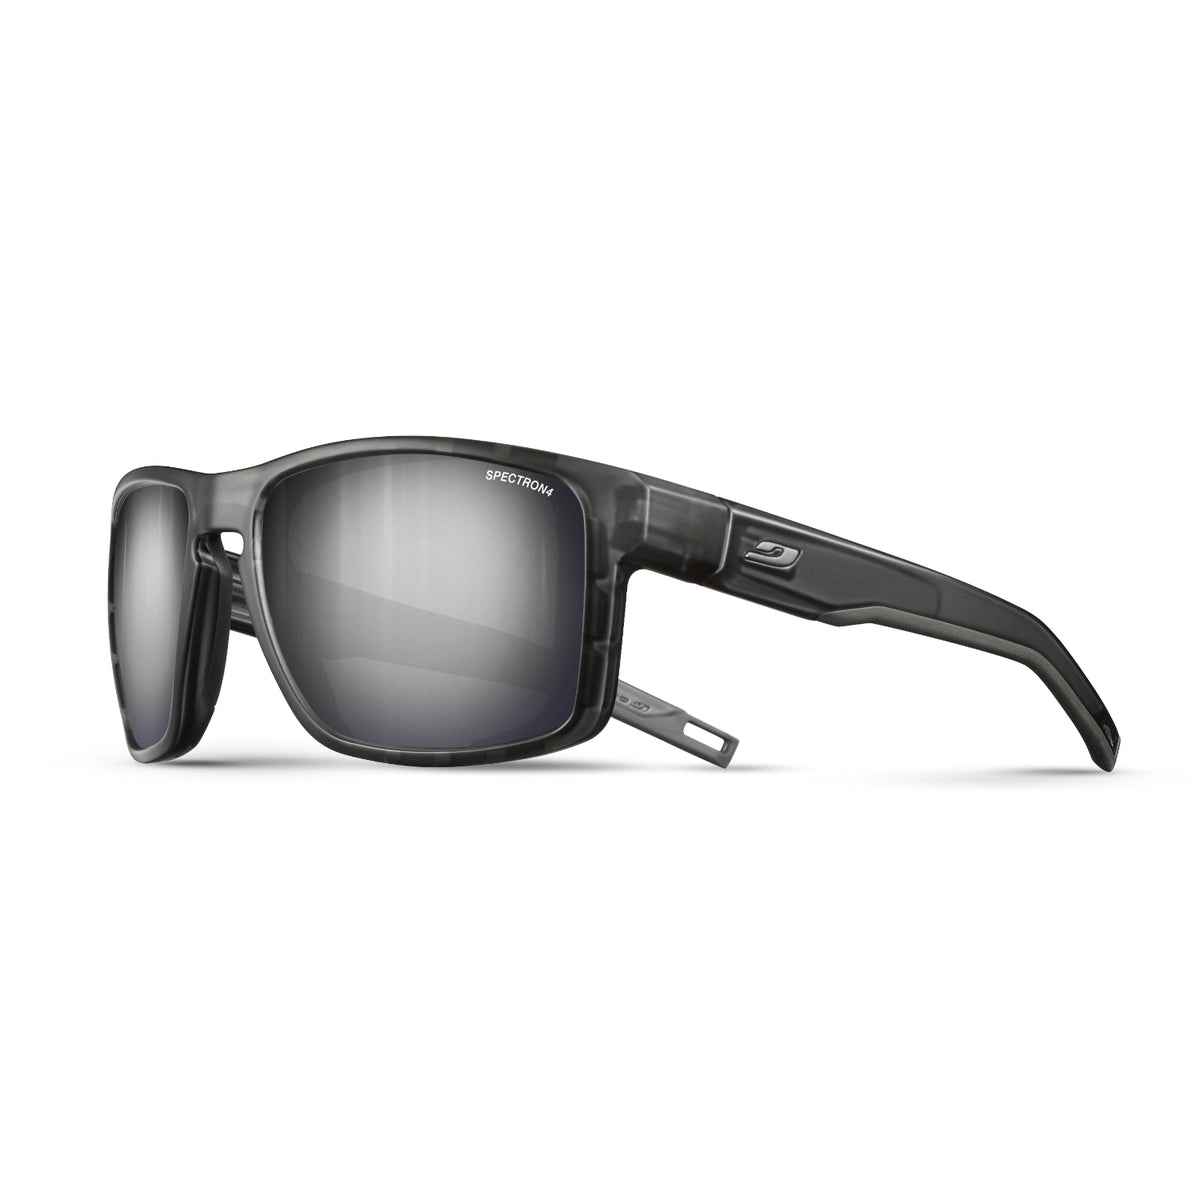 Julbo Shield SPECTRON 4 sunglasses in black